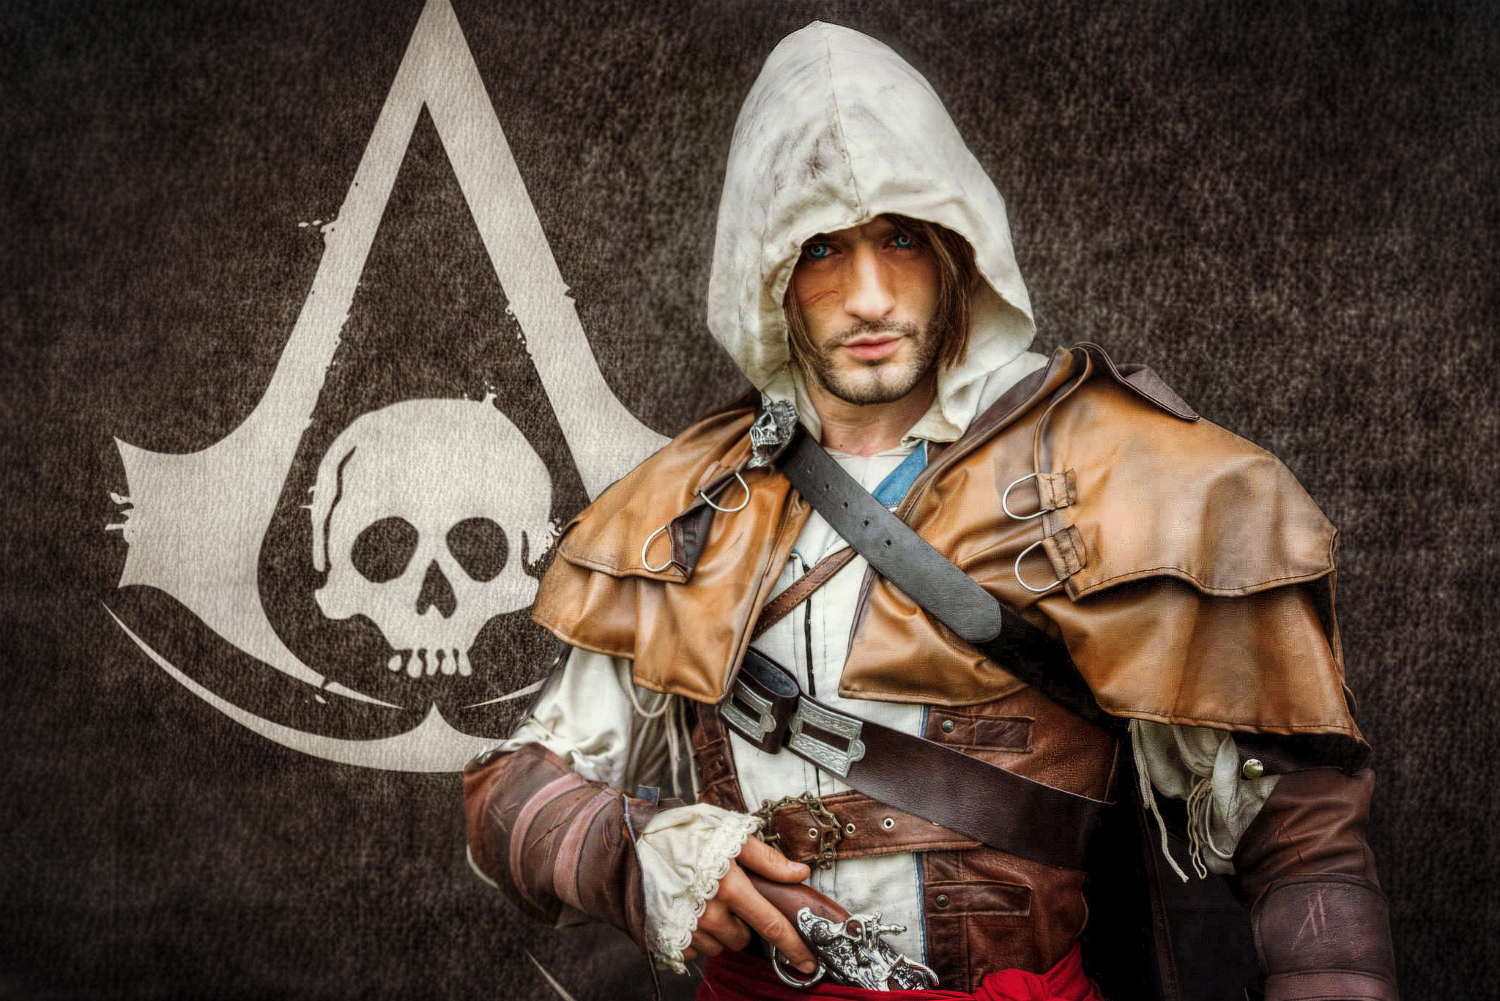 Edward Kenway, Assassin's Creed cosplay